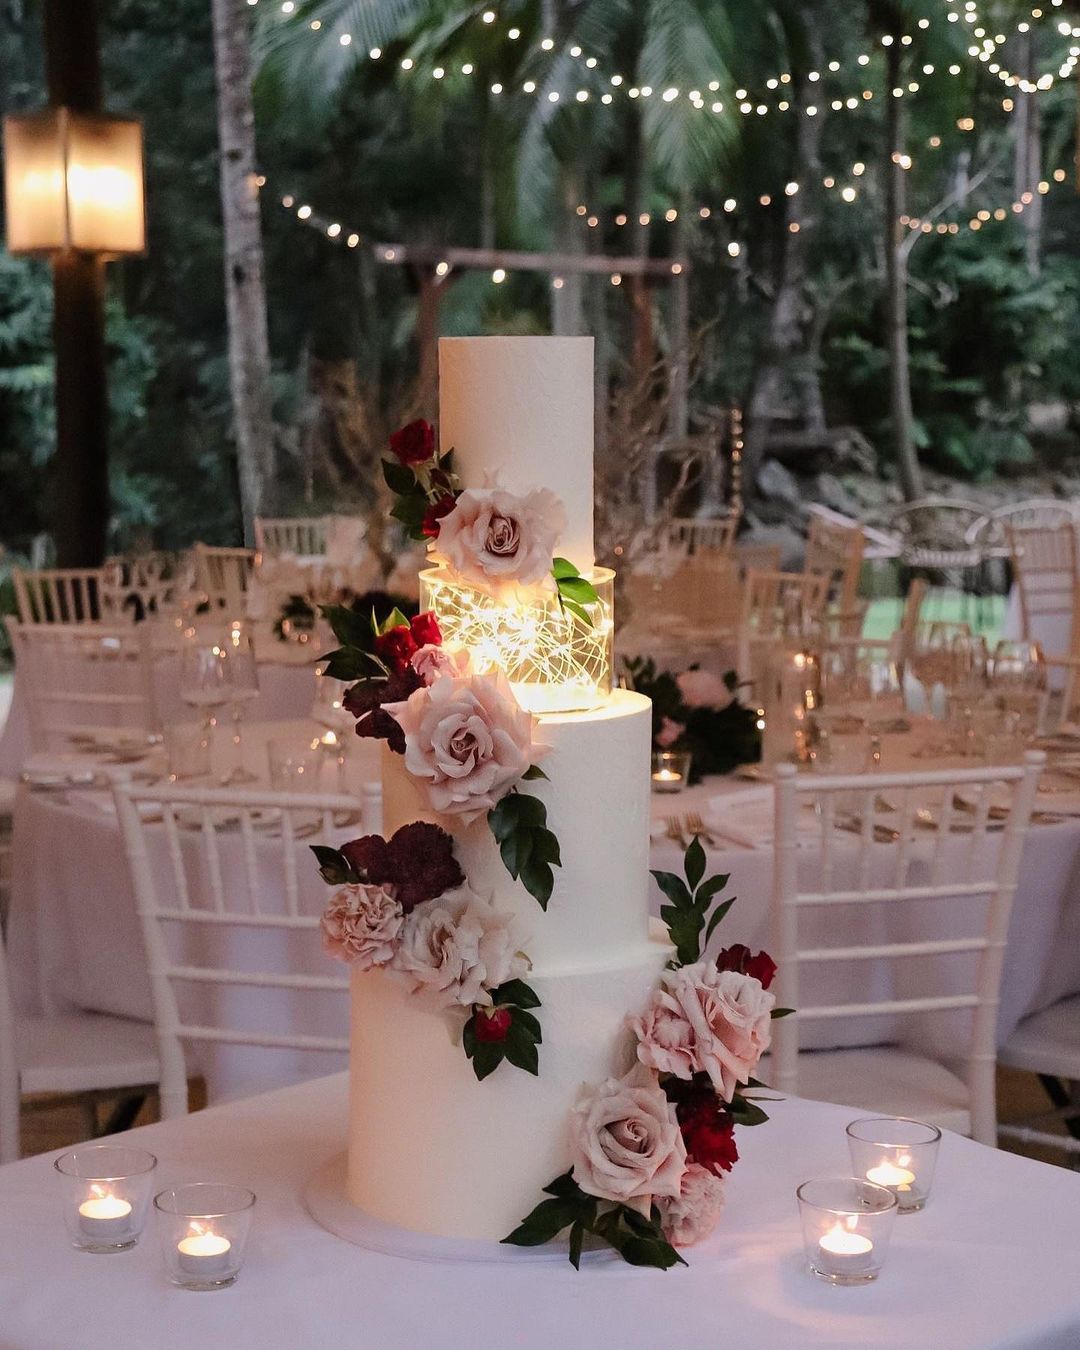 romantic wedding cake with floating lighting via milkandhoney.cakecreative